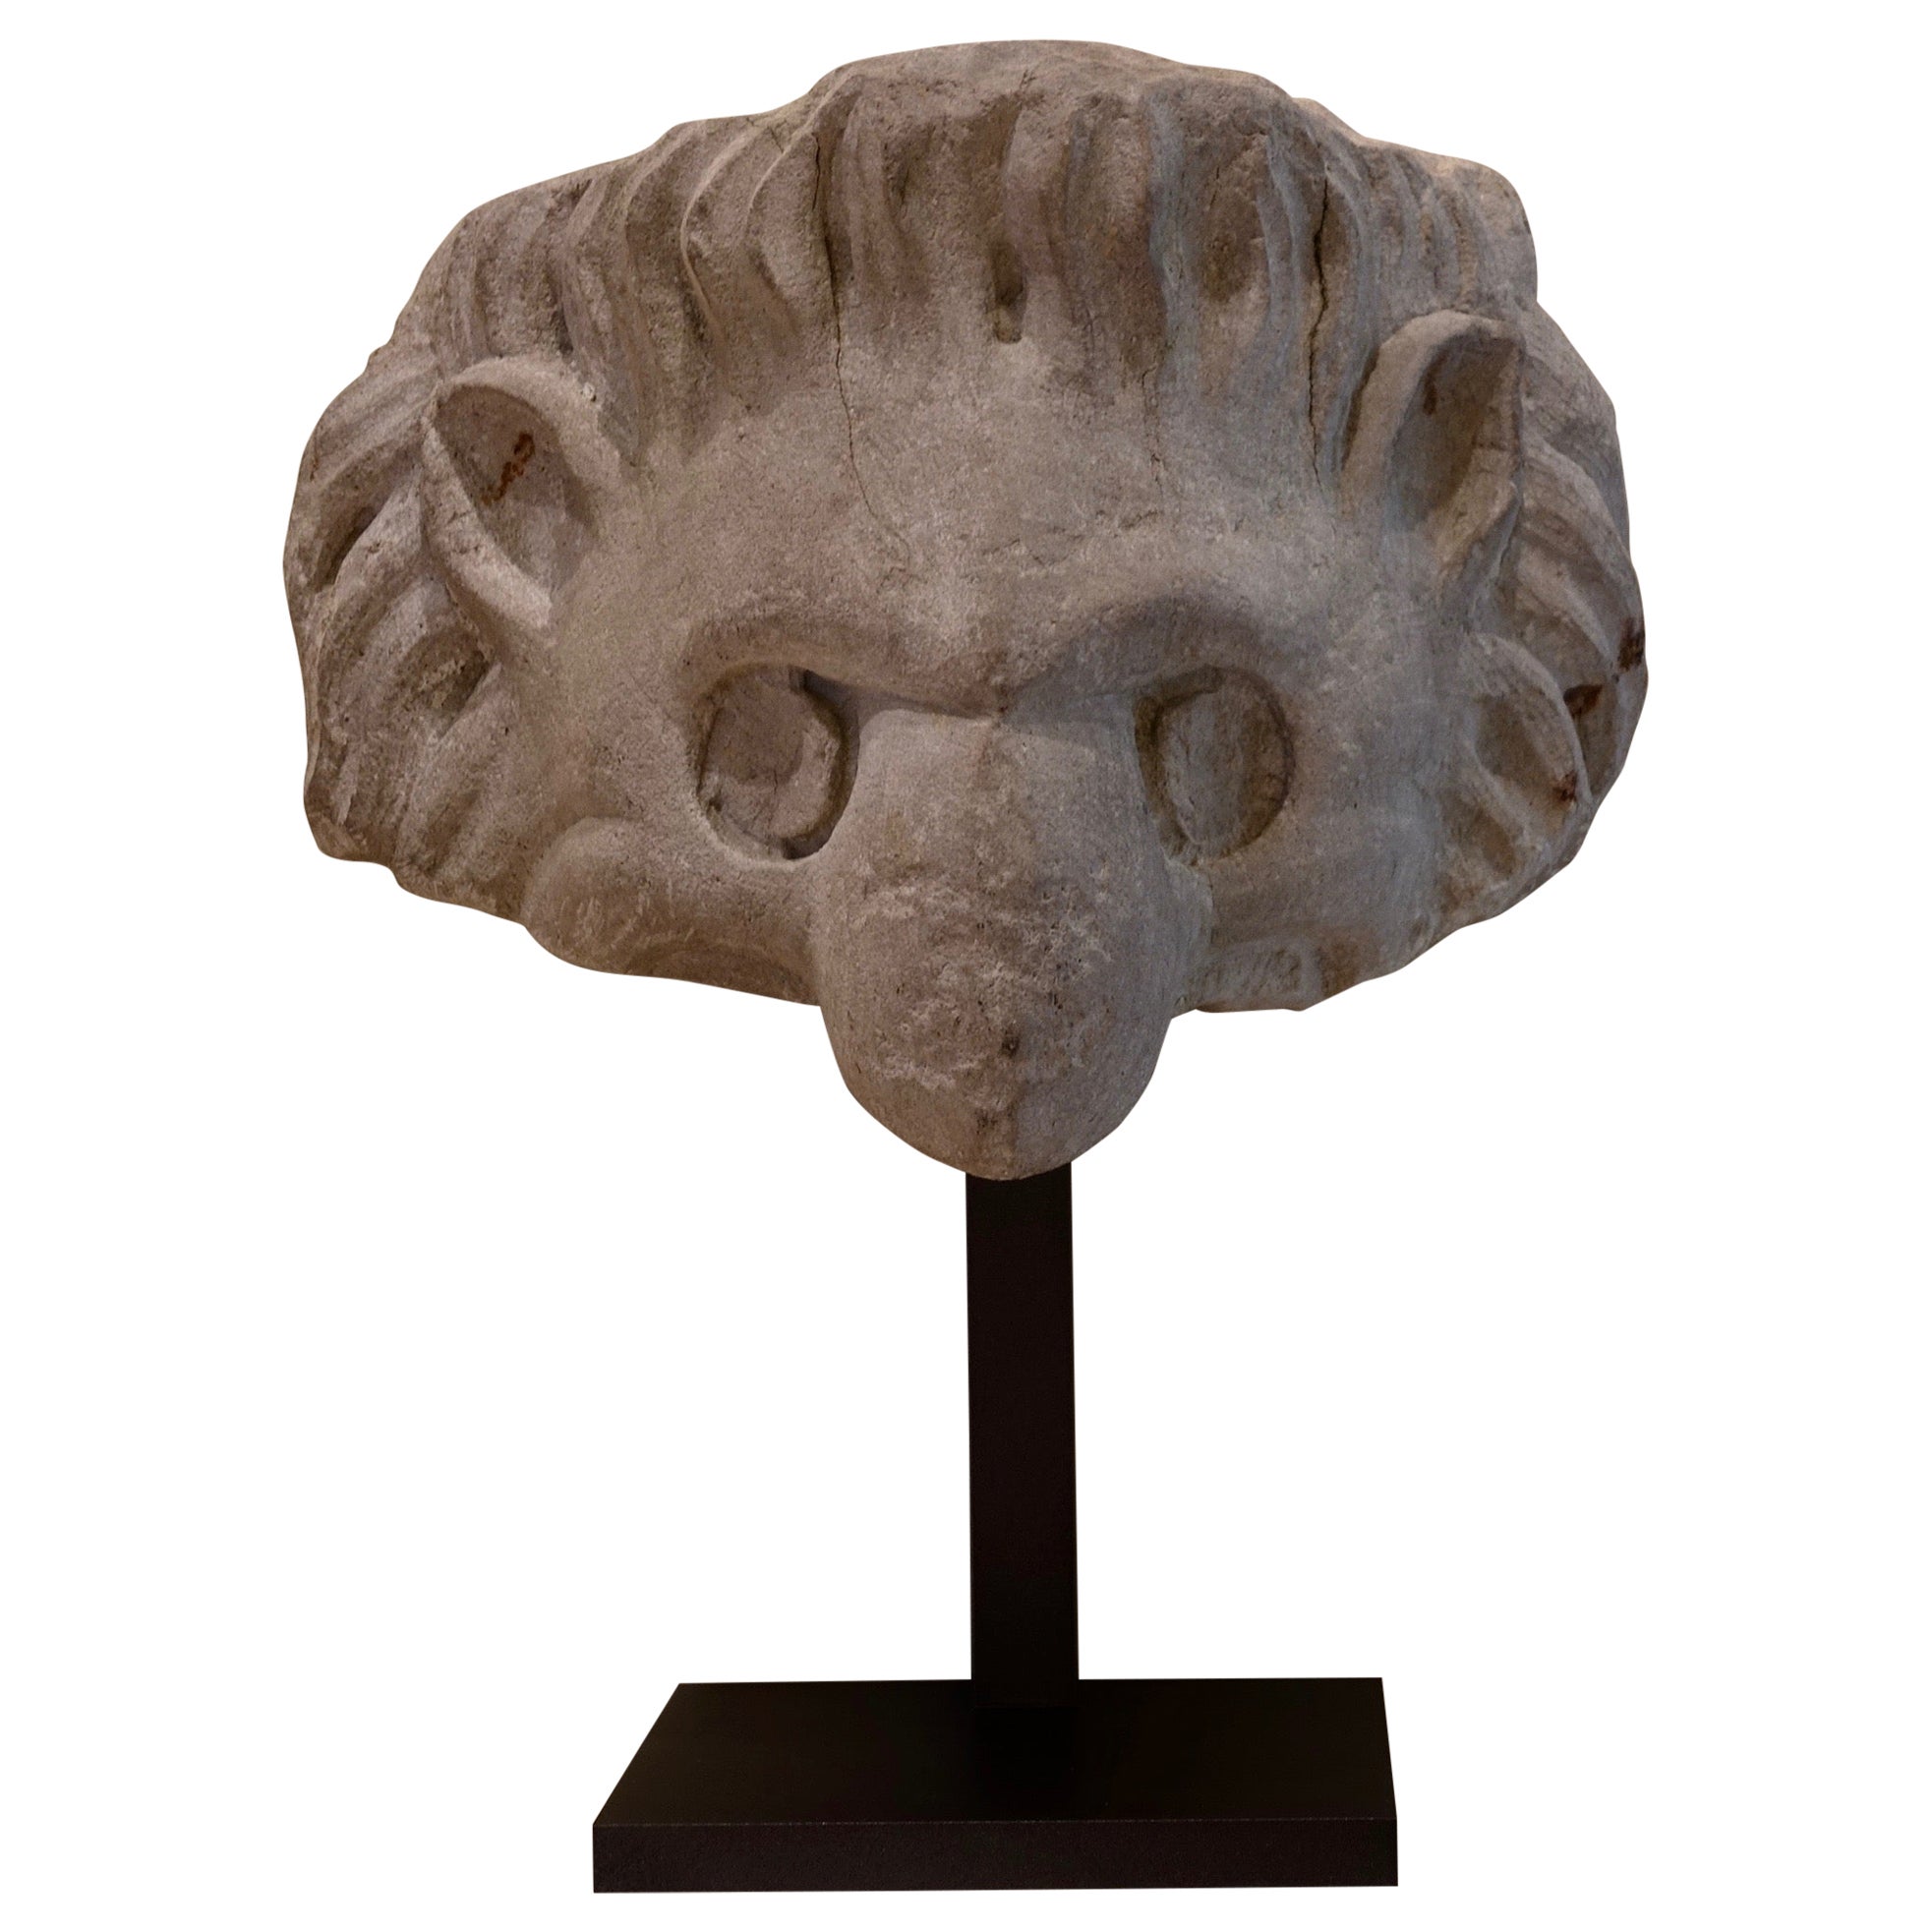 16h century Griffin Head - Italy